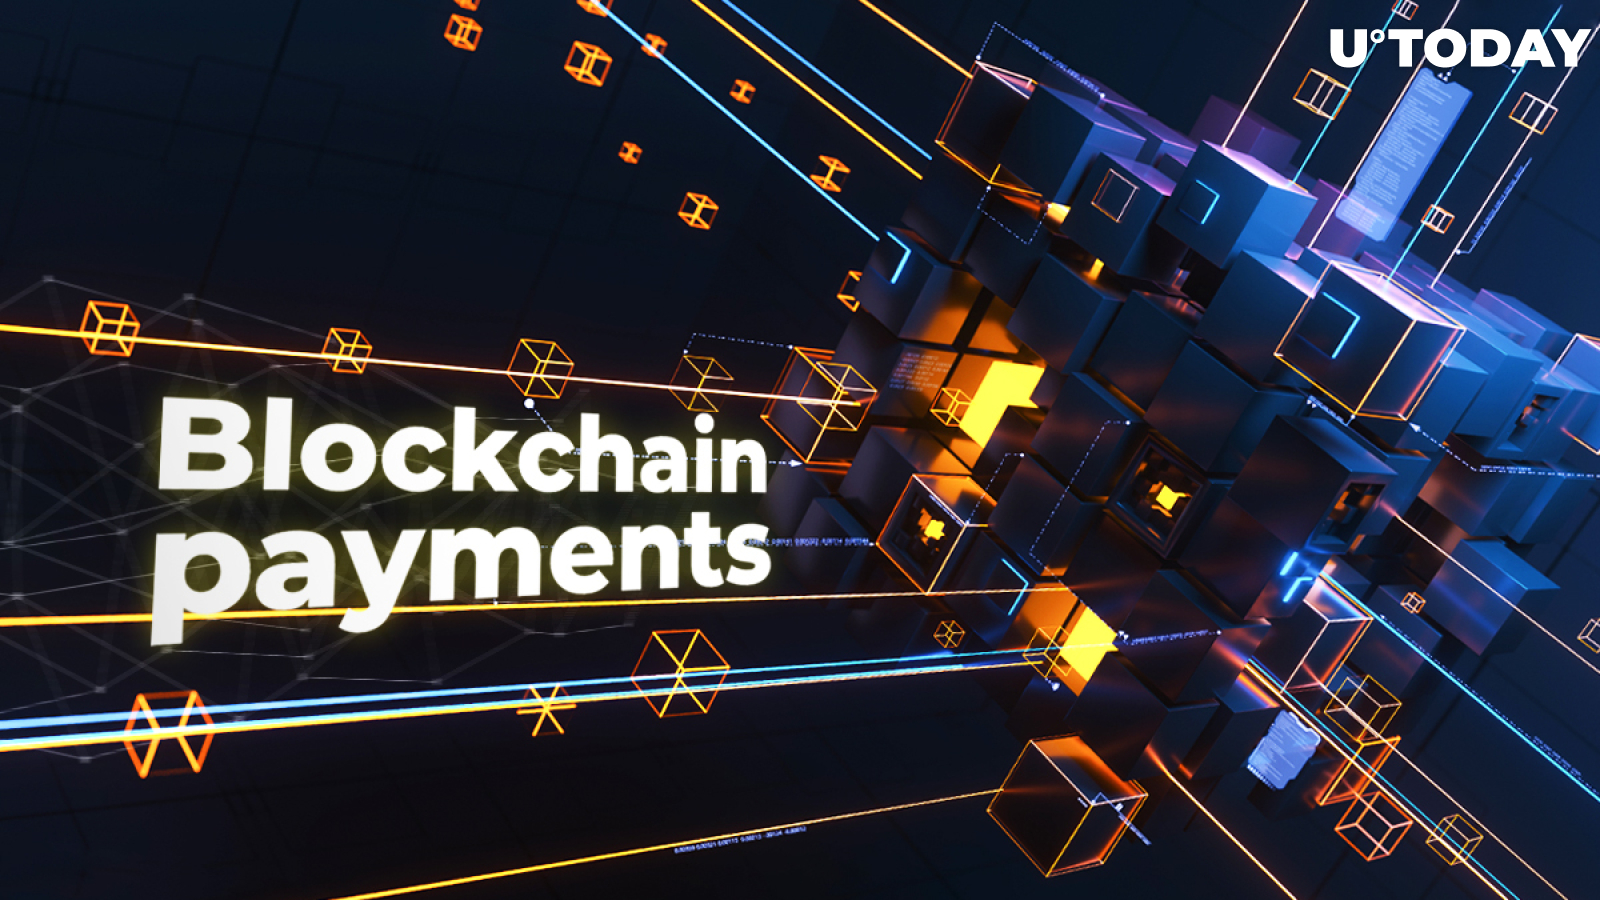 Blockchain Associations promote payments through Blockchain technology